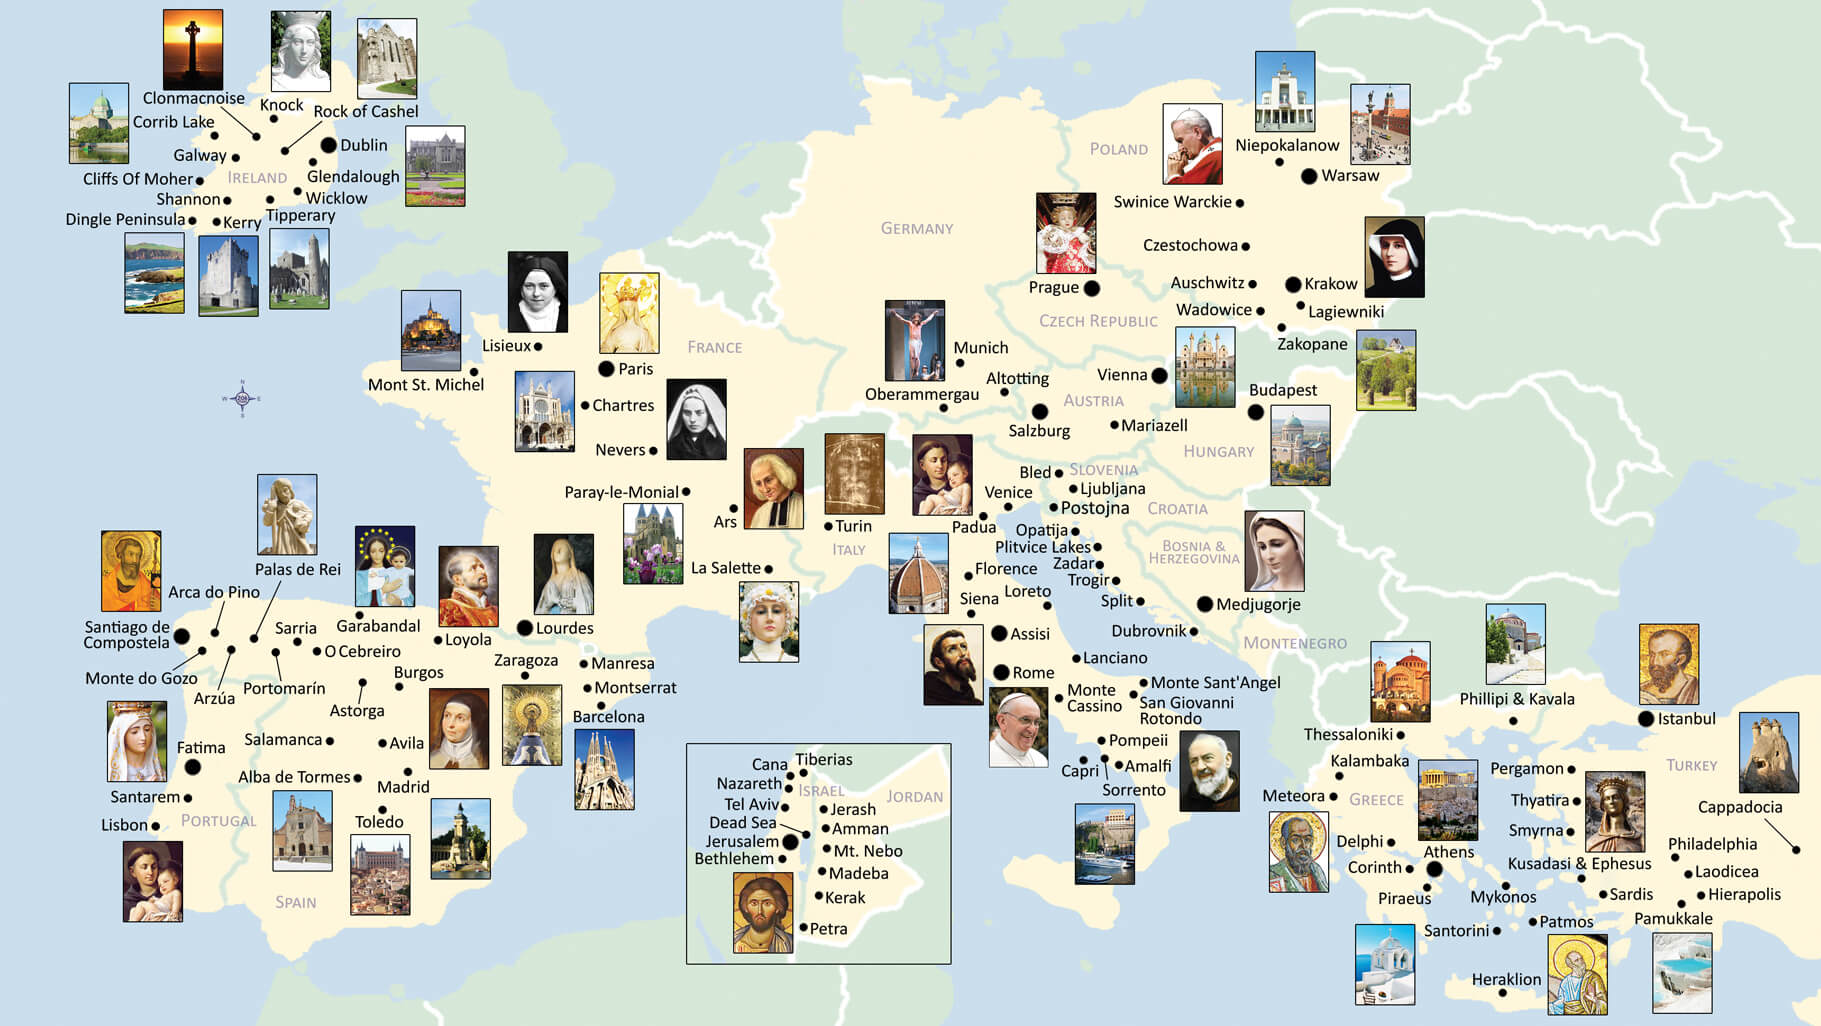 Catholic Pilgrimages & Spiritual Journeys with 206 Tours - Since 1985